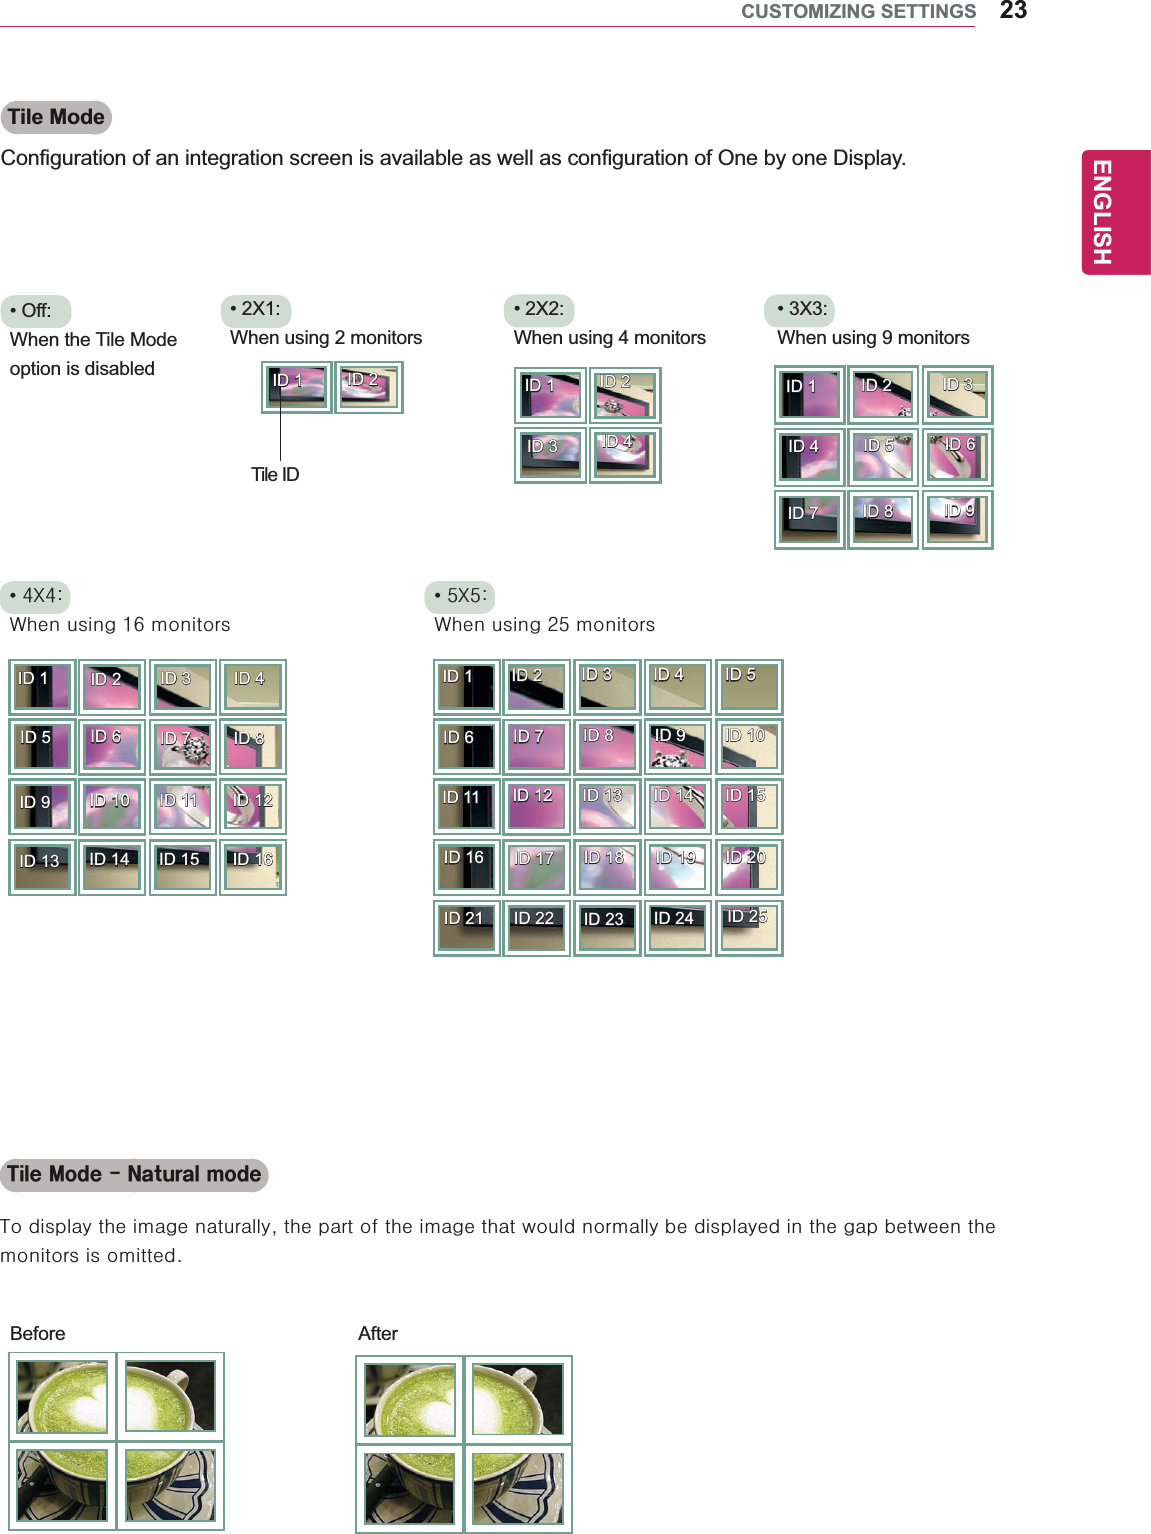 23ENGENGLISHCUSTOMIZING SETTINGSTile ModeConfiguration of an integration screen is available as well as configuration of One by one Display.5JMF.PEF/BUVSBMNPEFWr#glvsod|#wkh#lpdjh#qdwxudoo|/#wkh#sduw#ri#wkh#lpdjh#wkdw#zrxog#qrupdoo|#eh#glvsod|hg#lq#wkh#jds#ehwzhhq#wkh#prqlwruv#lv#rplwwhg1ID 1 ID 2ID 3 ID 4ID 1 ID 2ID 4 ID 5ID 3ID 6ID 7 ID 8 ID 93X3:When using 9 monitorsID 1 ID 1ID 2 ID 2ID 5 ID 6ID 6 ID 7ID 3 ID 3ID 7 ID 8ID 9 ID 11ID 10 ID 12ID 11 ID 13ID 4 ID 4 ID 5ID 8 ID 9 ID 10ID 12 ID 14 ID 15ID 13 ID 16ID 21ID 14 ID 17ID 22ID 15 ID 18ID 23ID 16 ID 19ID 24ID 20ID 25When the Tile Mode option is disabled ID 1 ID 22X1:When using 2 monitorsWhen using 4 monitors#8[8=Zkhq#xvlqj#58#prqlwruv#7[7=Zkhq#xvlqj#49#prqlwruvTile IDBefore After